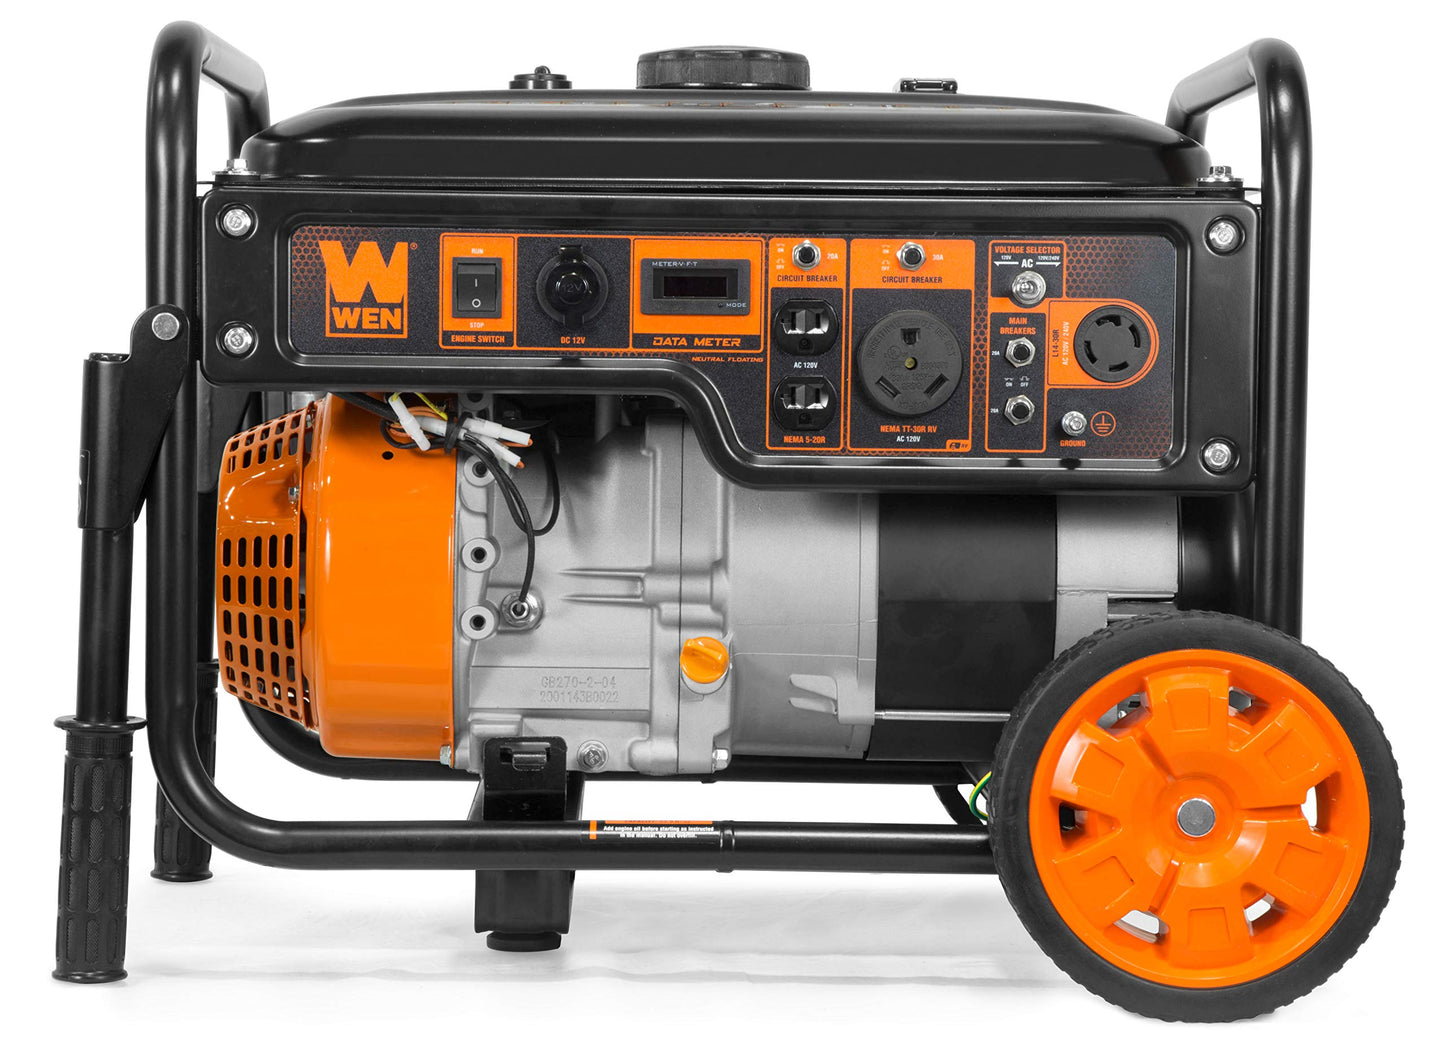 WEN 6000-Watt 120V/240V Generator, RV-Ready with Portable Wheel Kit (GN6000), Black 6000W + Single Fuel + Recoil Start